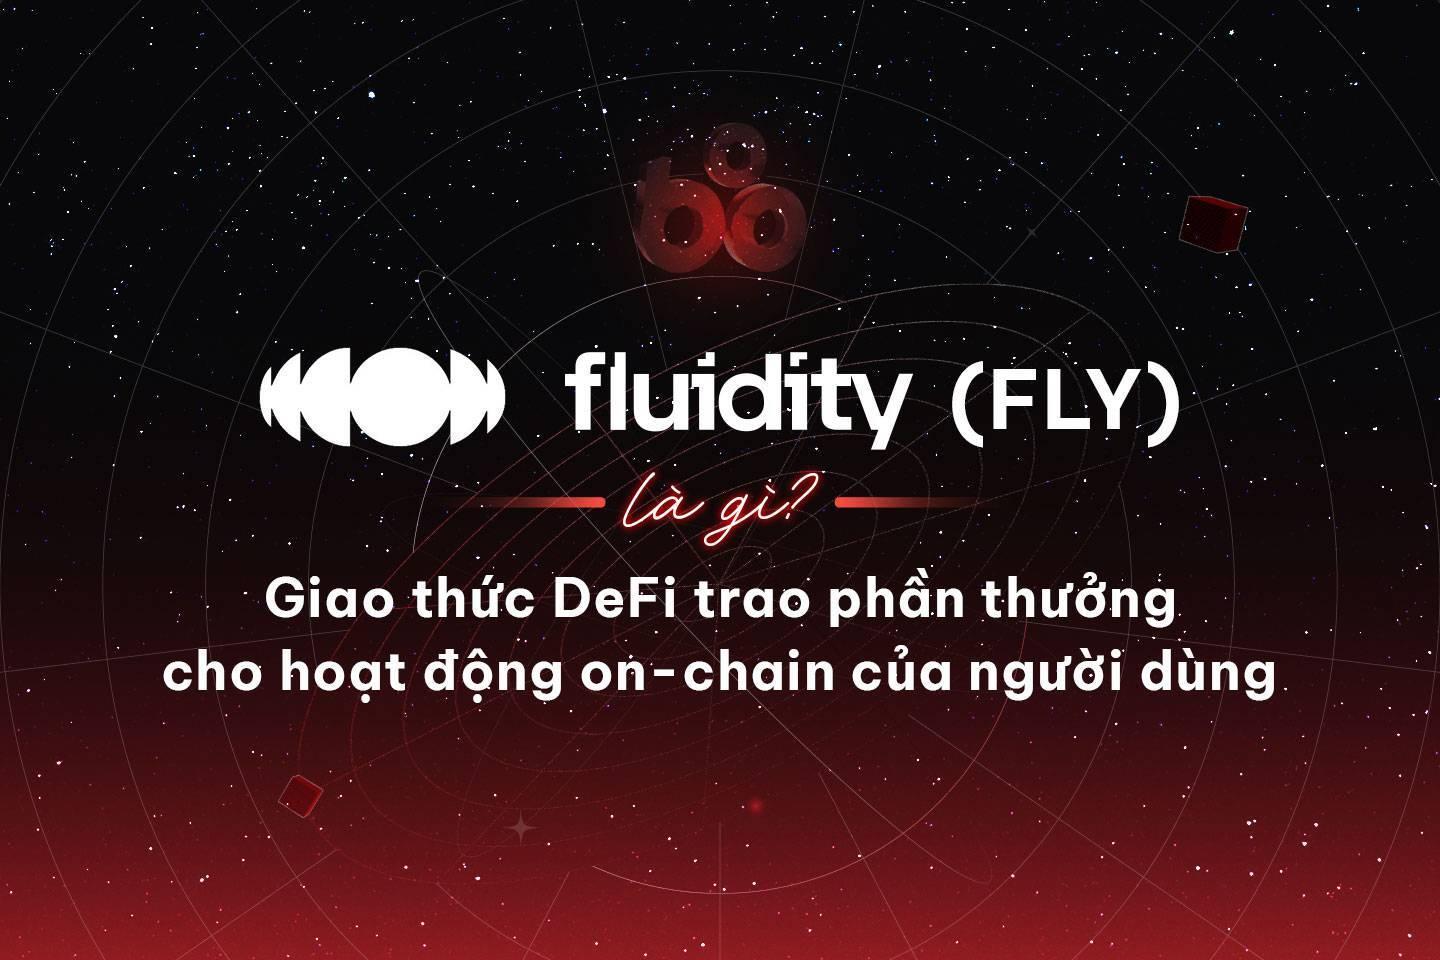 fluidity-fly-la-gi-giao-thuc-defi-trao-phan-thuong-cho-hoat-dong-on-chain-cua-nguoi-dung